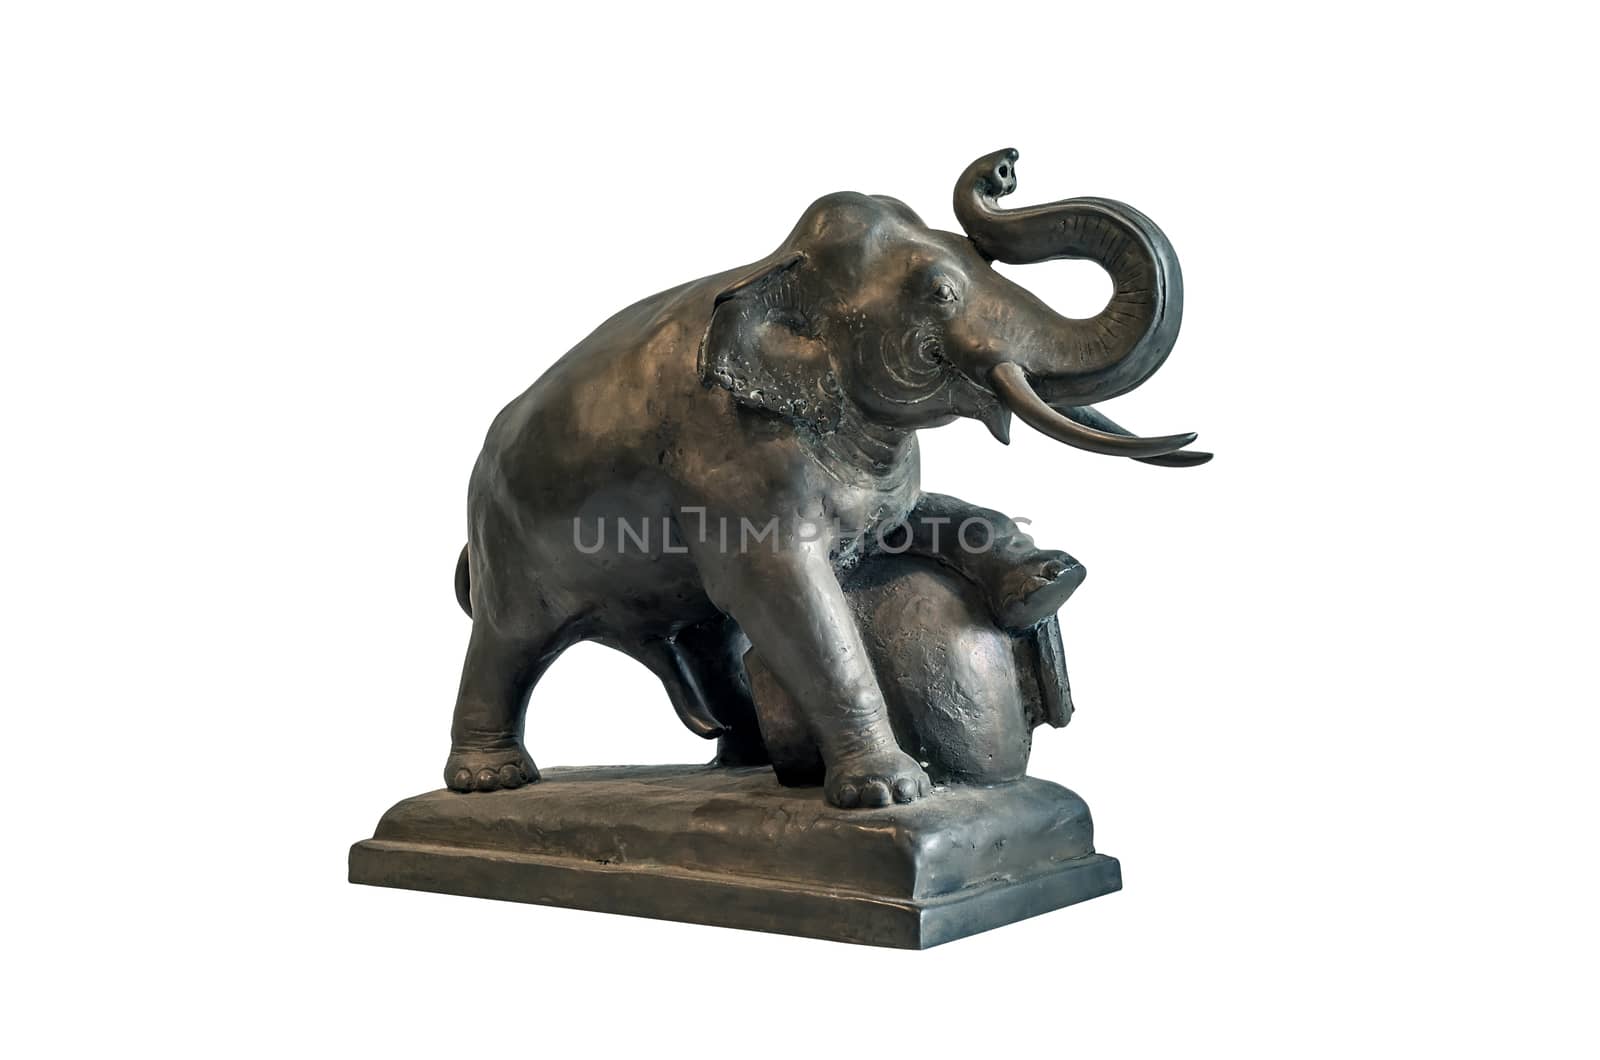 Metal molded elephant figure asia design on white background.